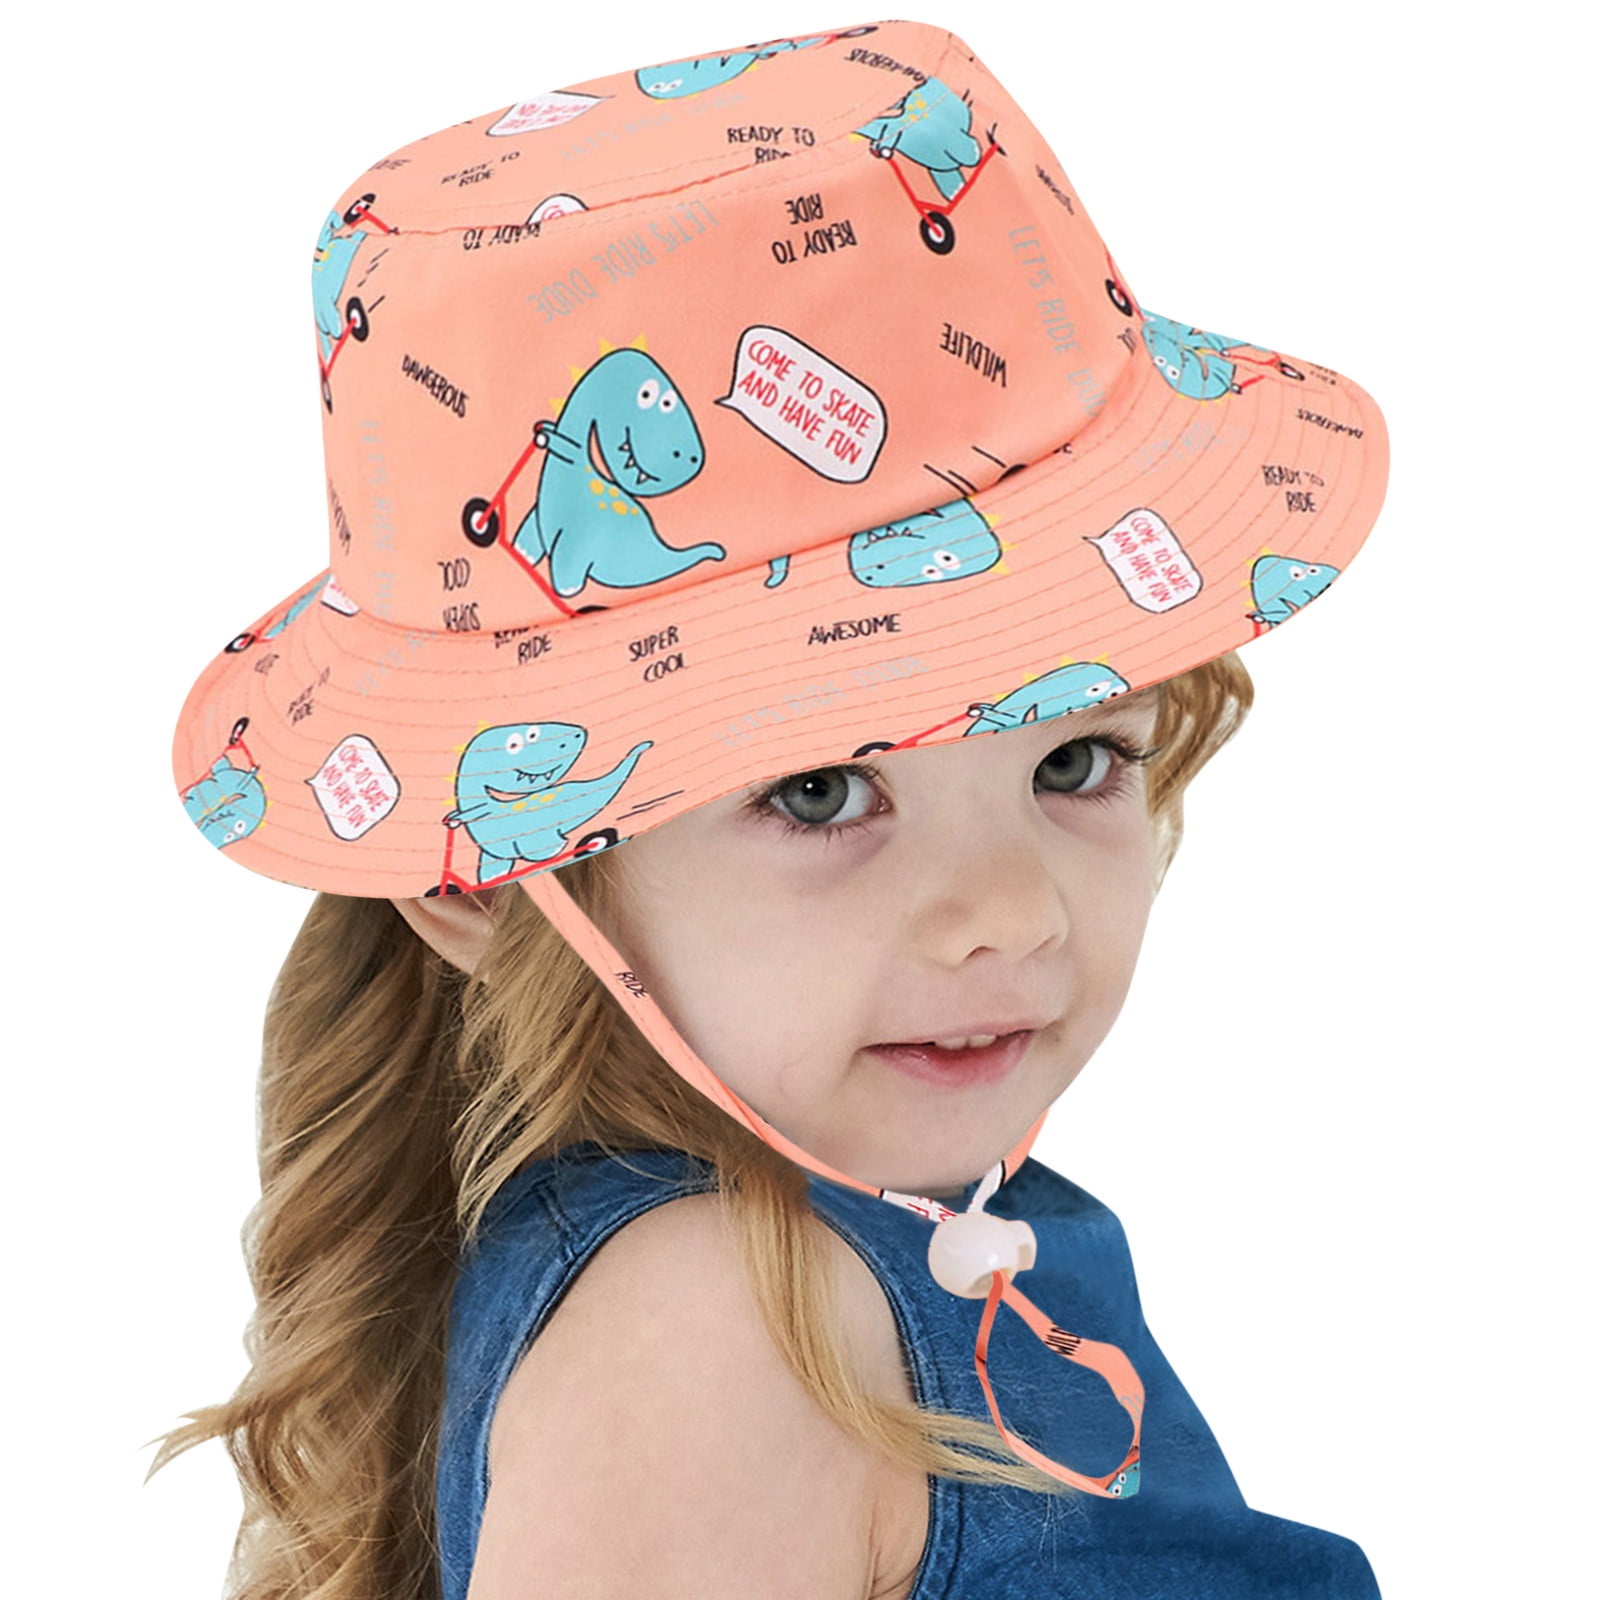 2dxuixsh Boys Hats 10-12 Years Outdoor Cute Bucket Cartoon Cap Adjustable Beach Summer Protection Sun Chin Hat Spring Hats Sun Kids Strap Kids Hats 